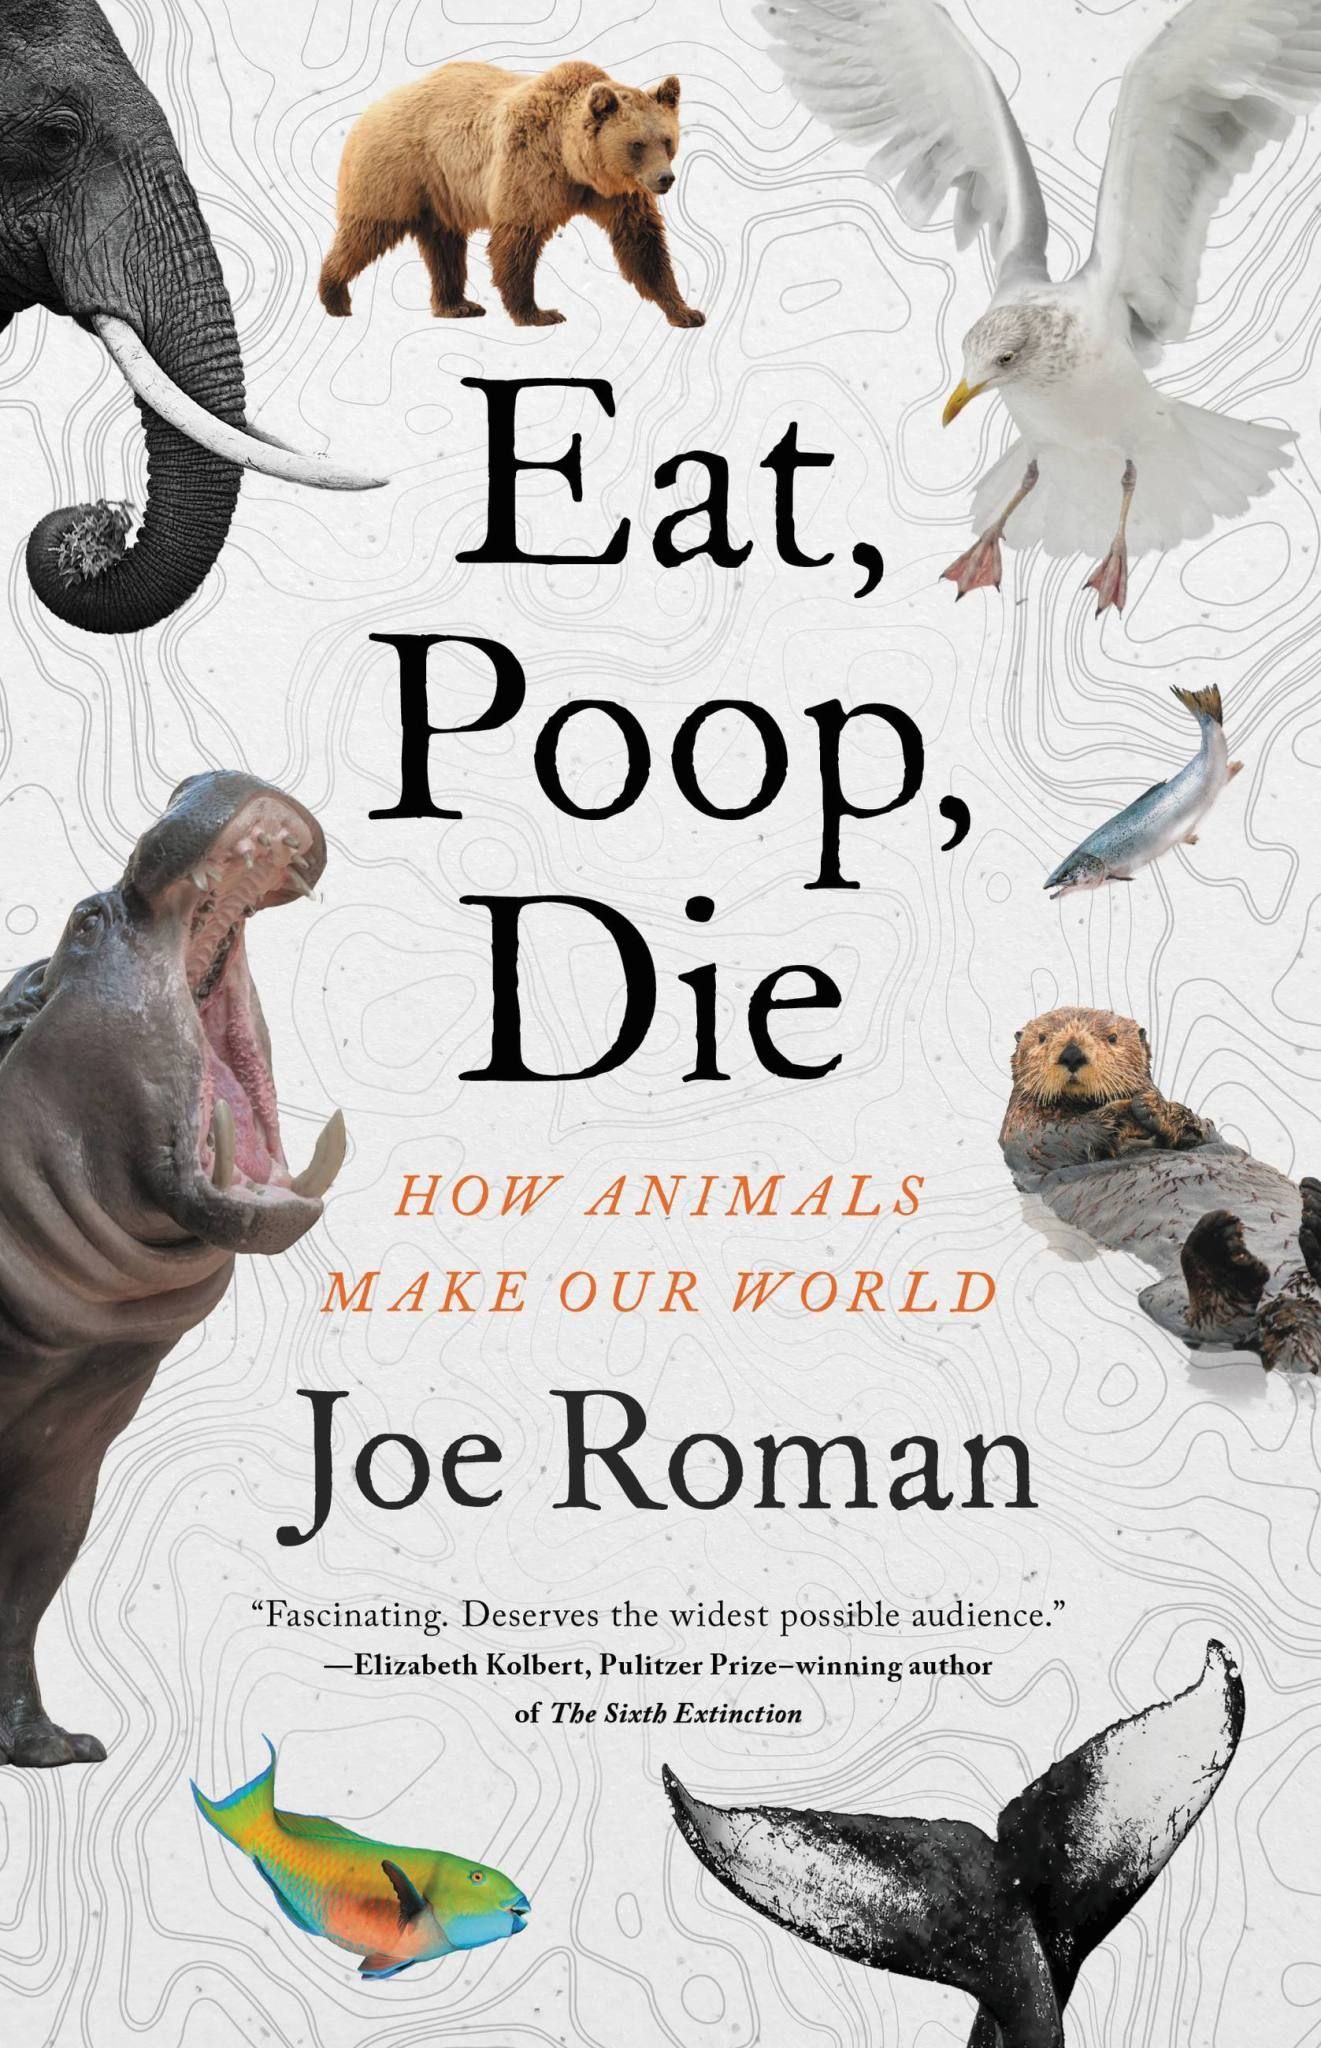 Animals as the Beating Heart of the Planet: On Joe Roman’s “Eat, Poop, Die”